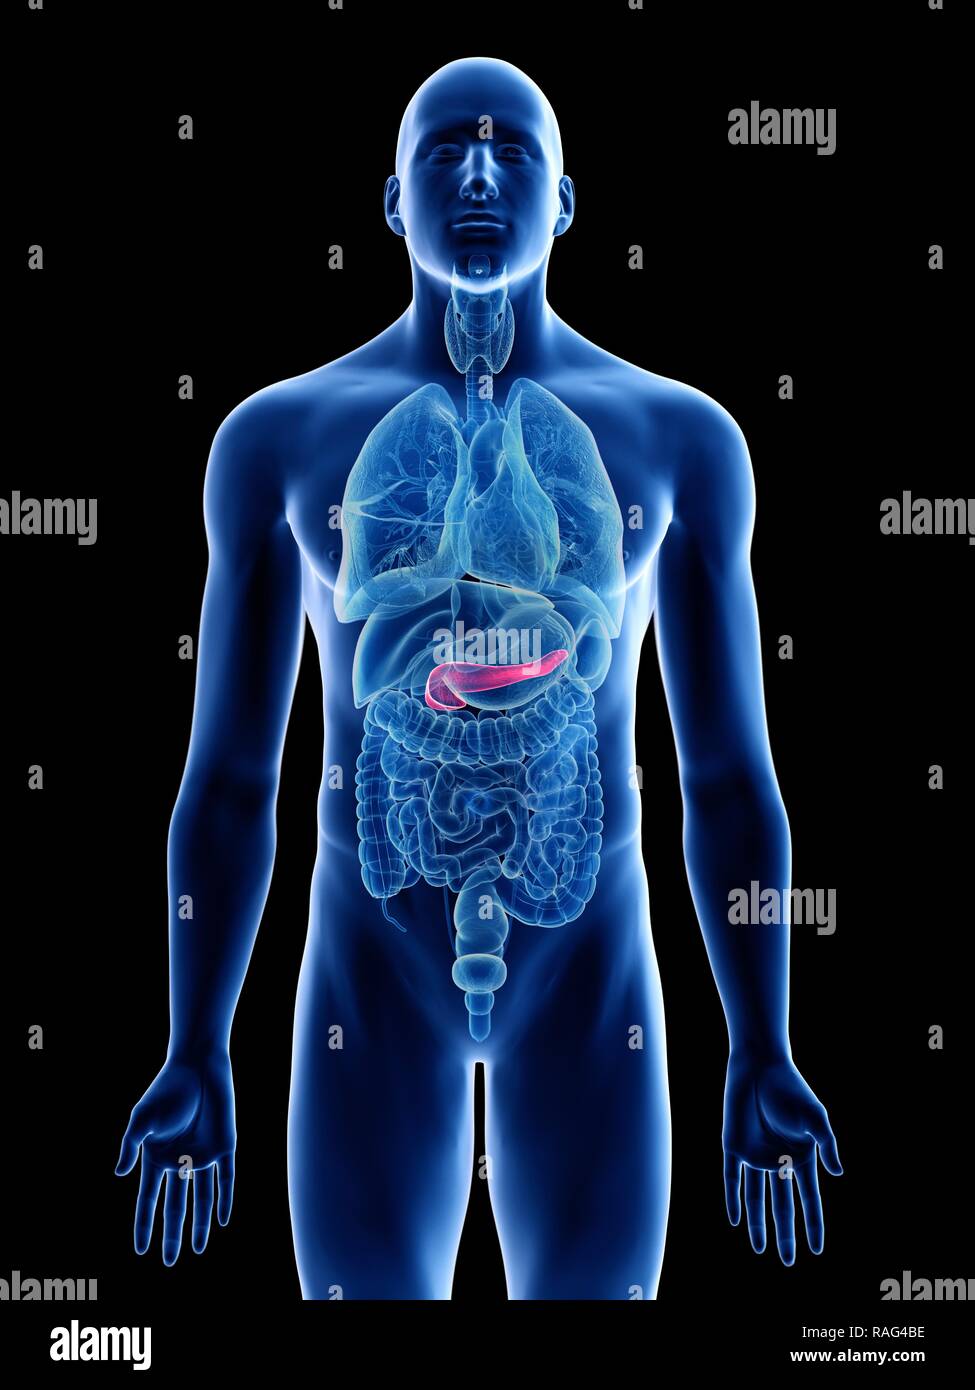 Illustration of a man's pancreas Stock Photo - Alamy